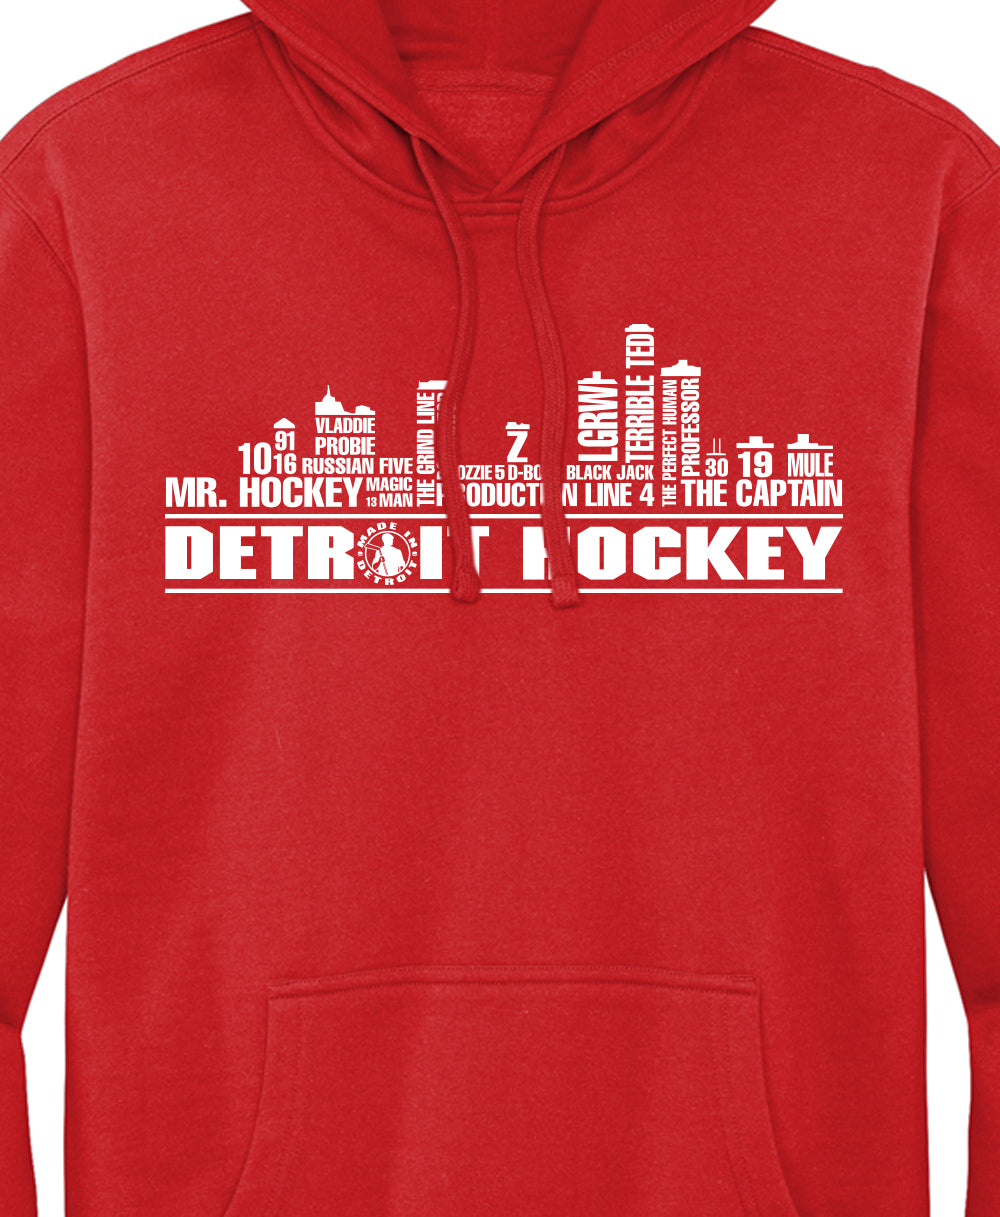 Detroit Hockey Skyline Pullover